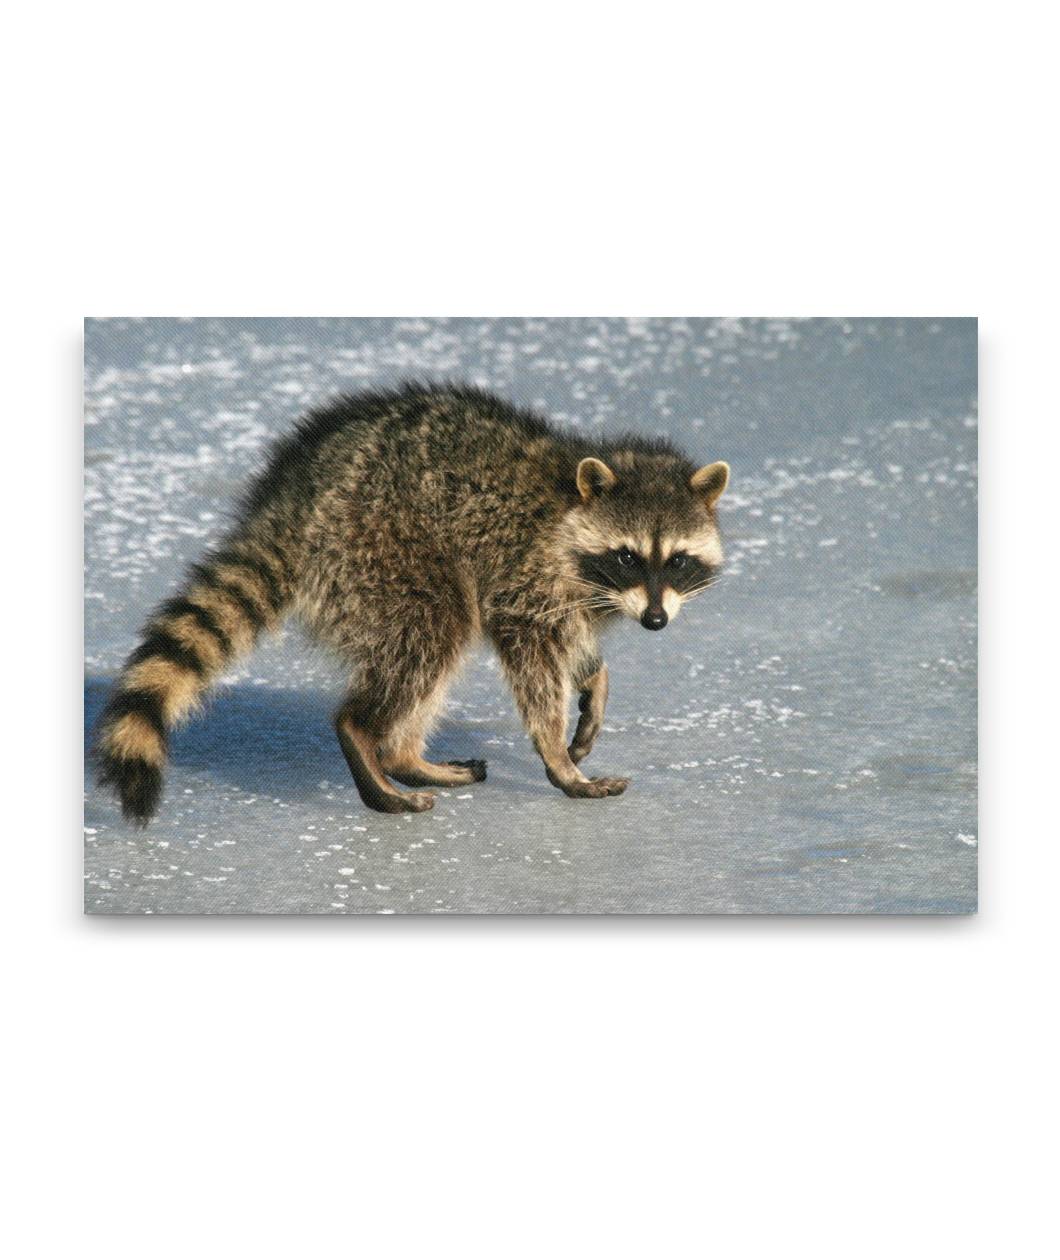 Raccoon on Ice, Lower Klamath National Wildlife Refuge, California